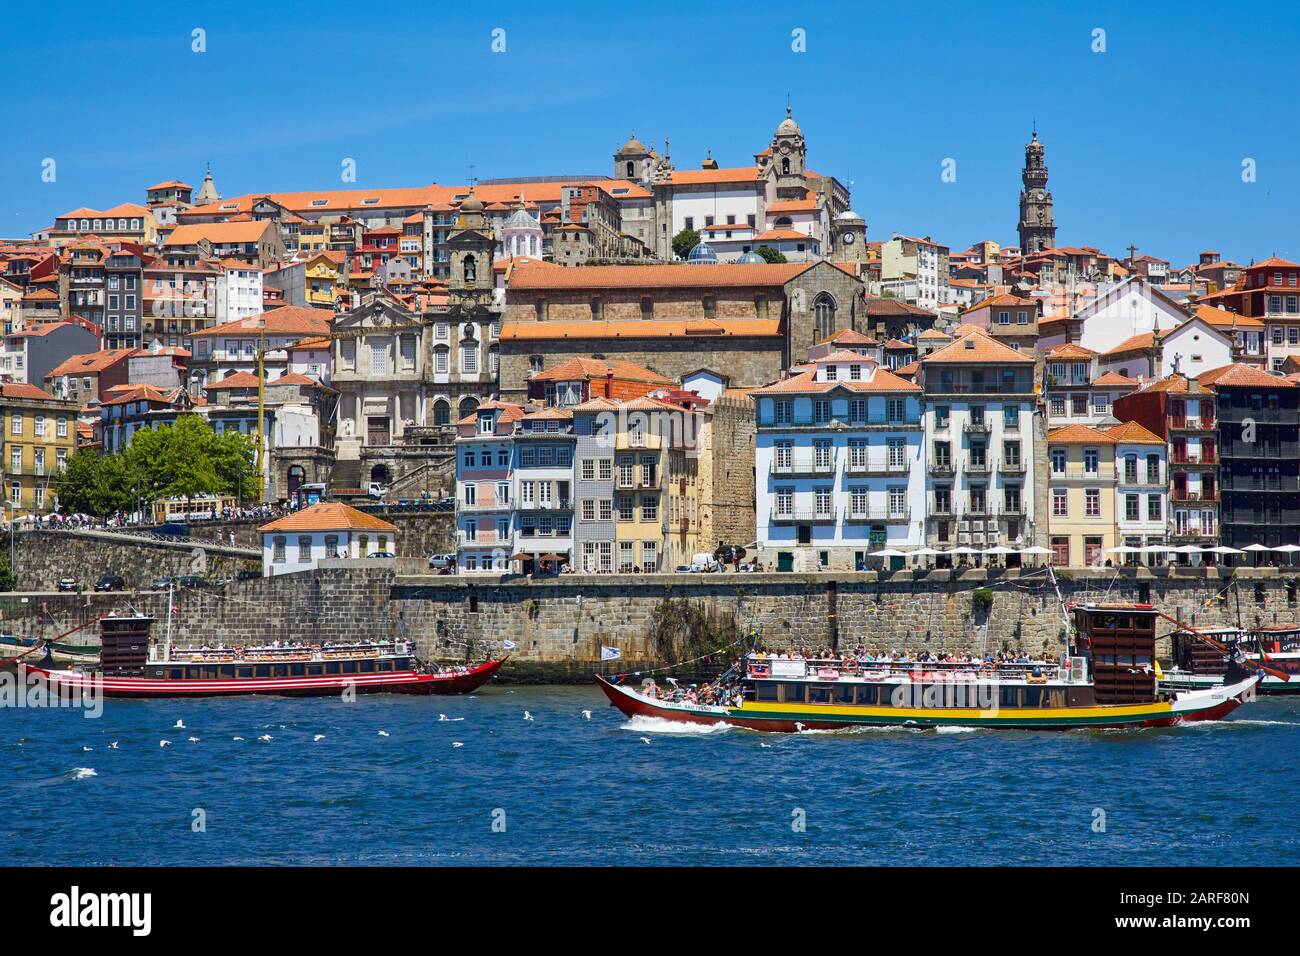 Barco turístico, Río Duero, Oporto, Portugal Foto de stock